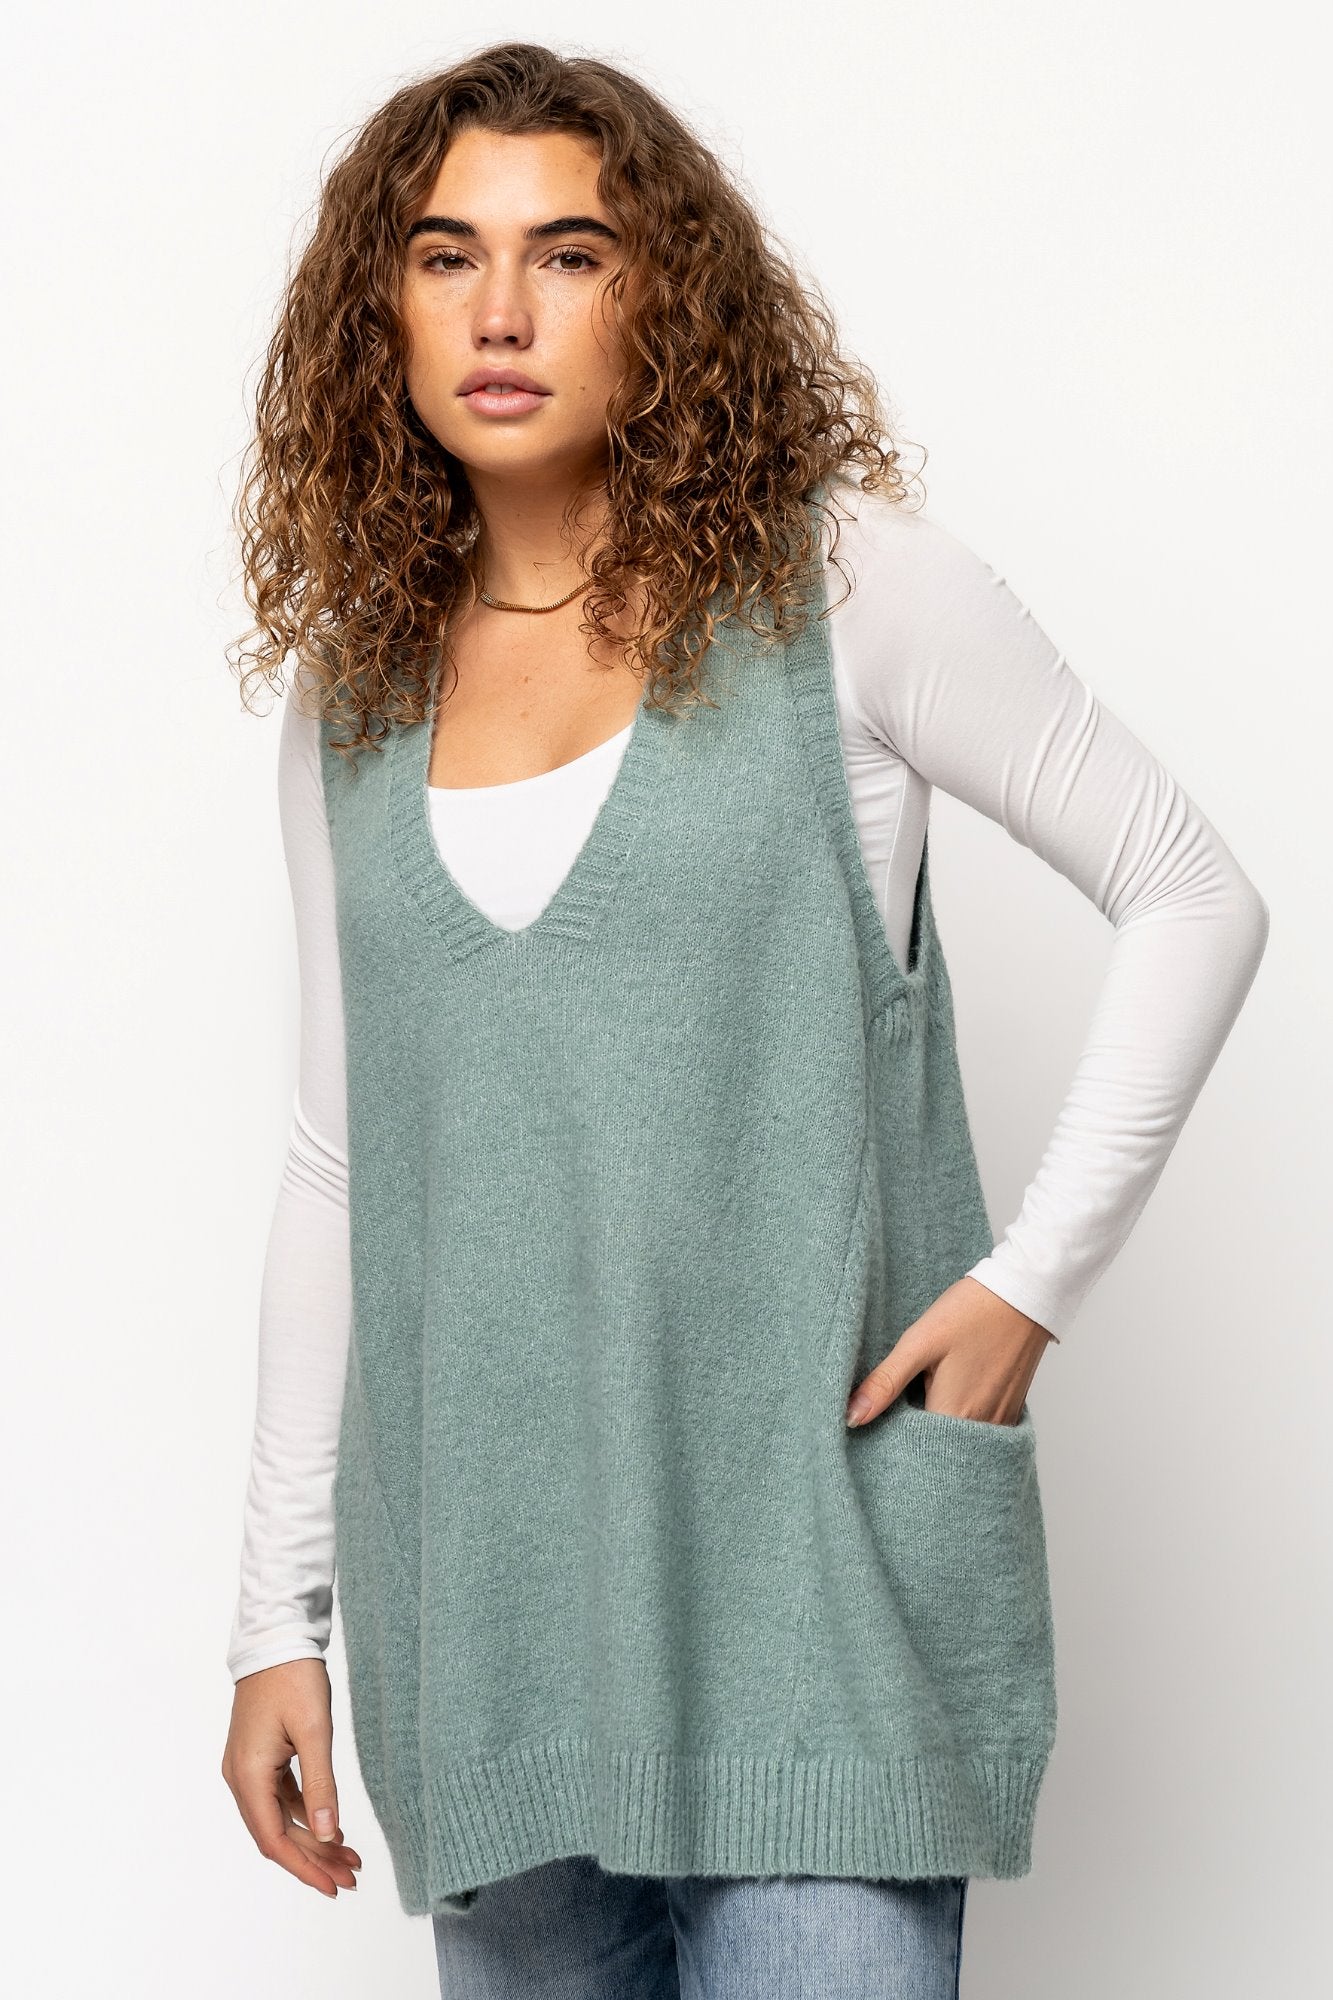 June Sweater Vest in Sea Salt Clothing Holley Girl 